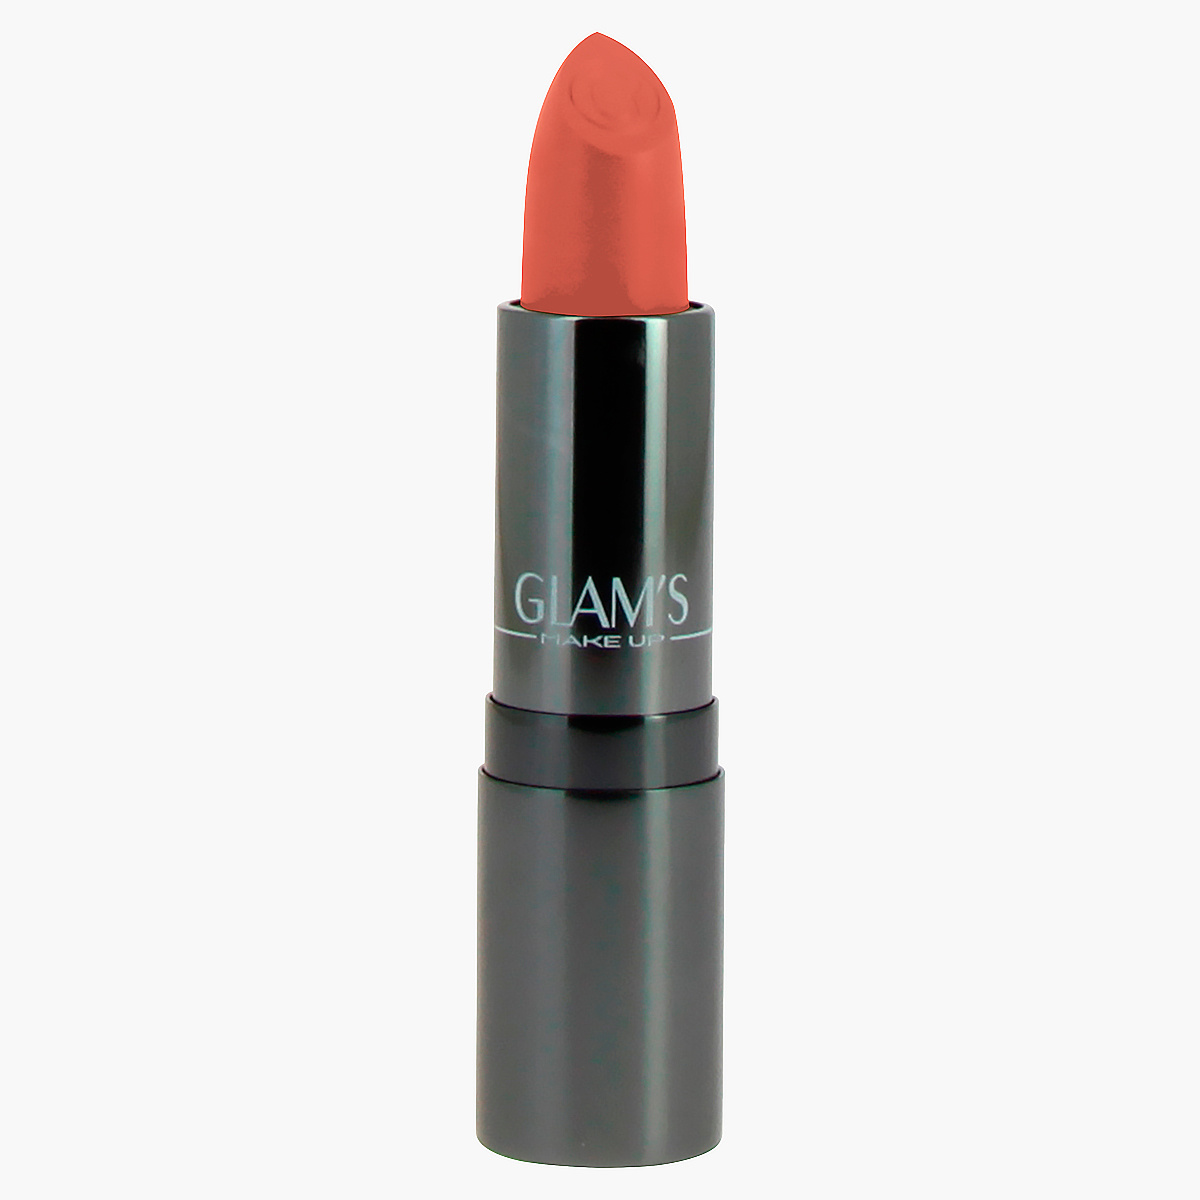 Glam's Makeup Be Mine Lipstick